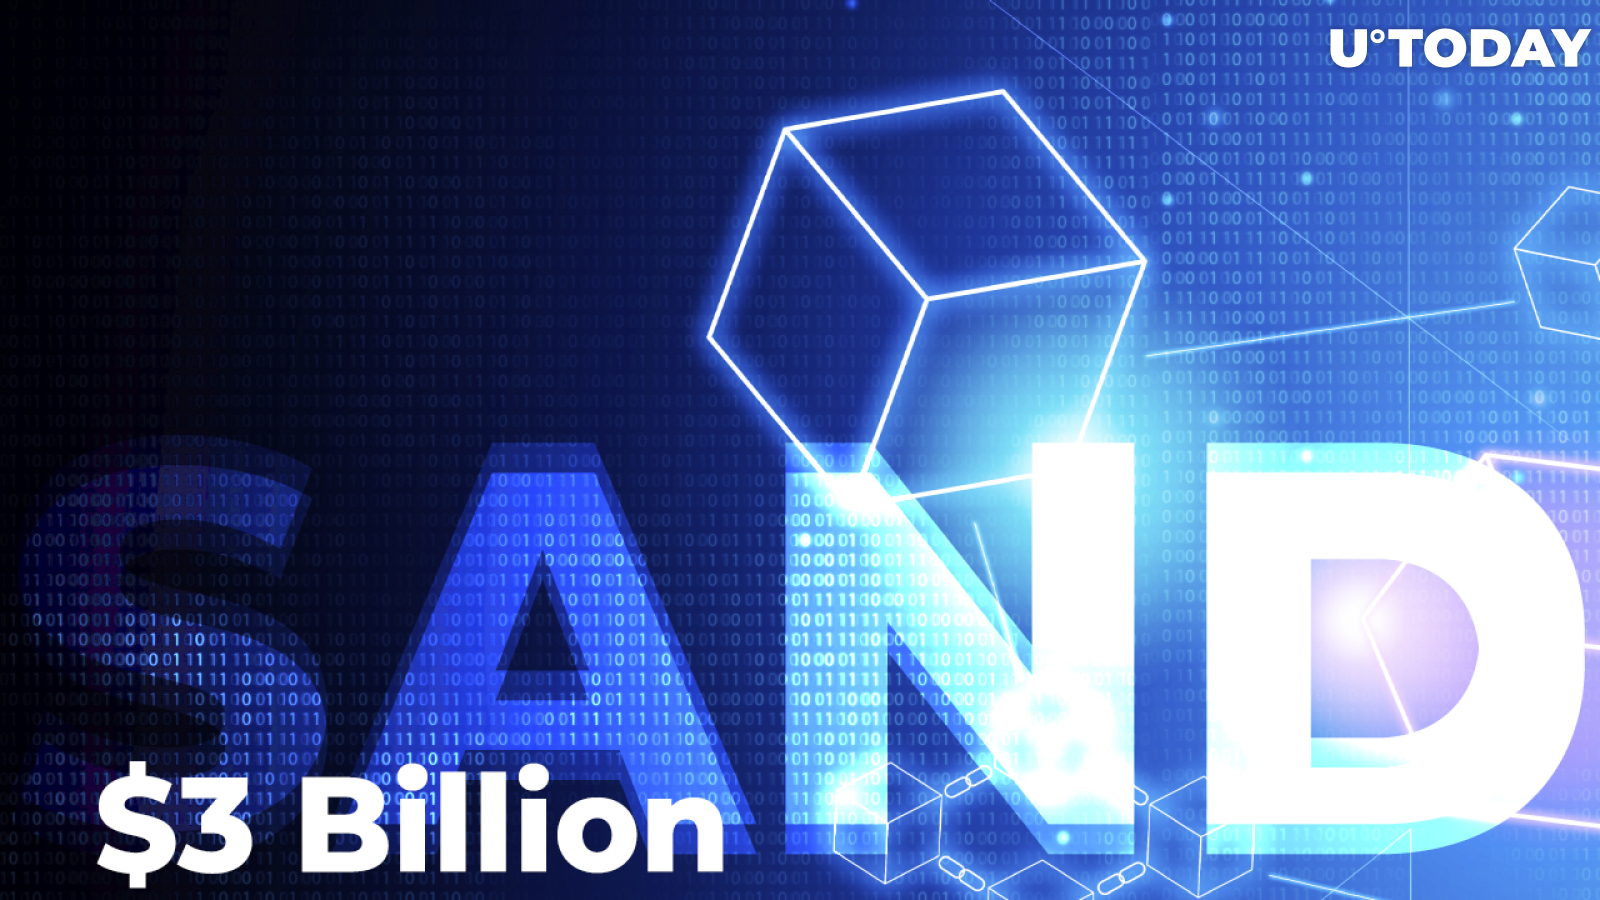 SAND Metaverse Token Reached $3 Billion in Transactional Volume in Last 24 Hours